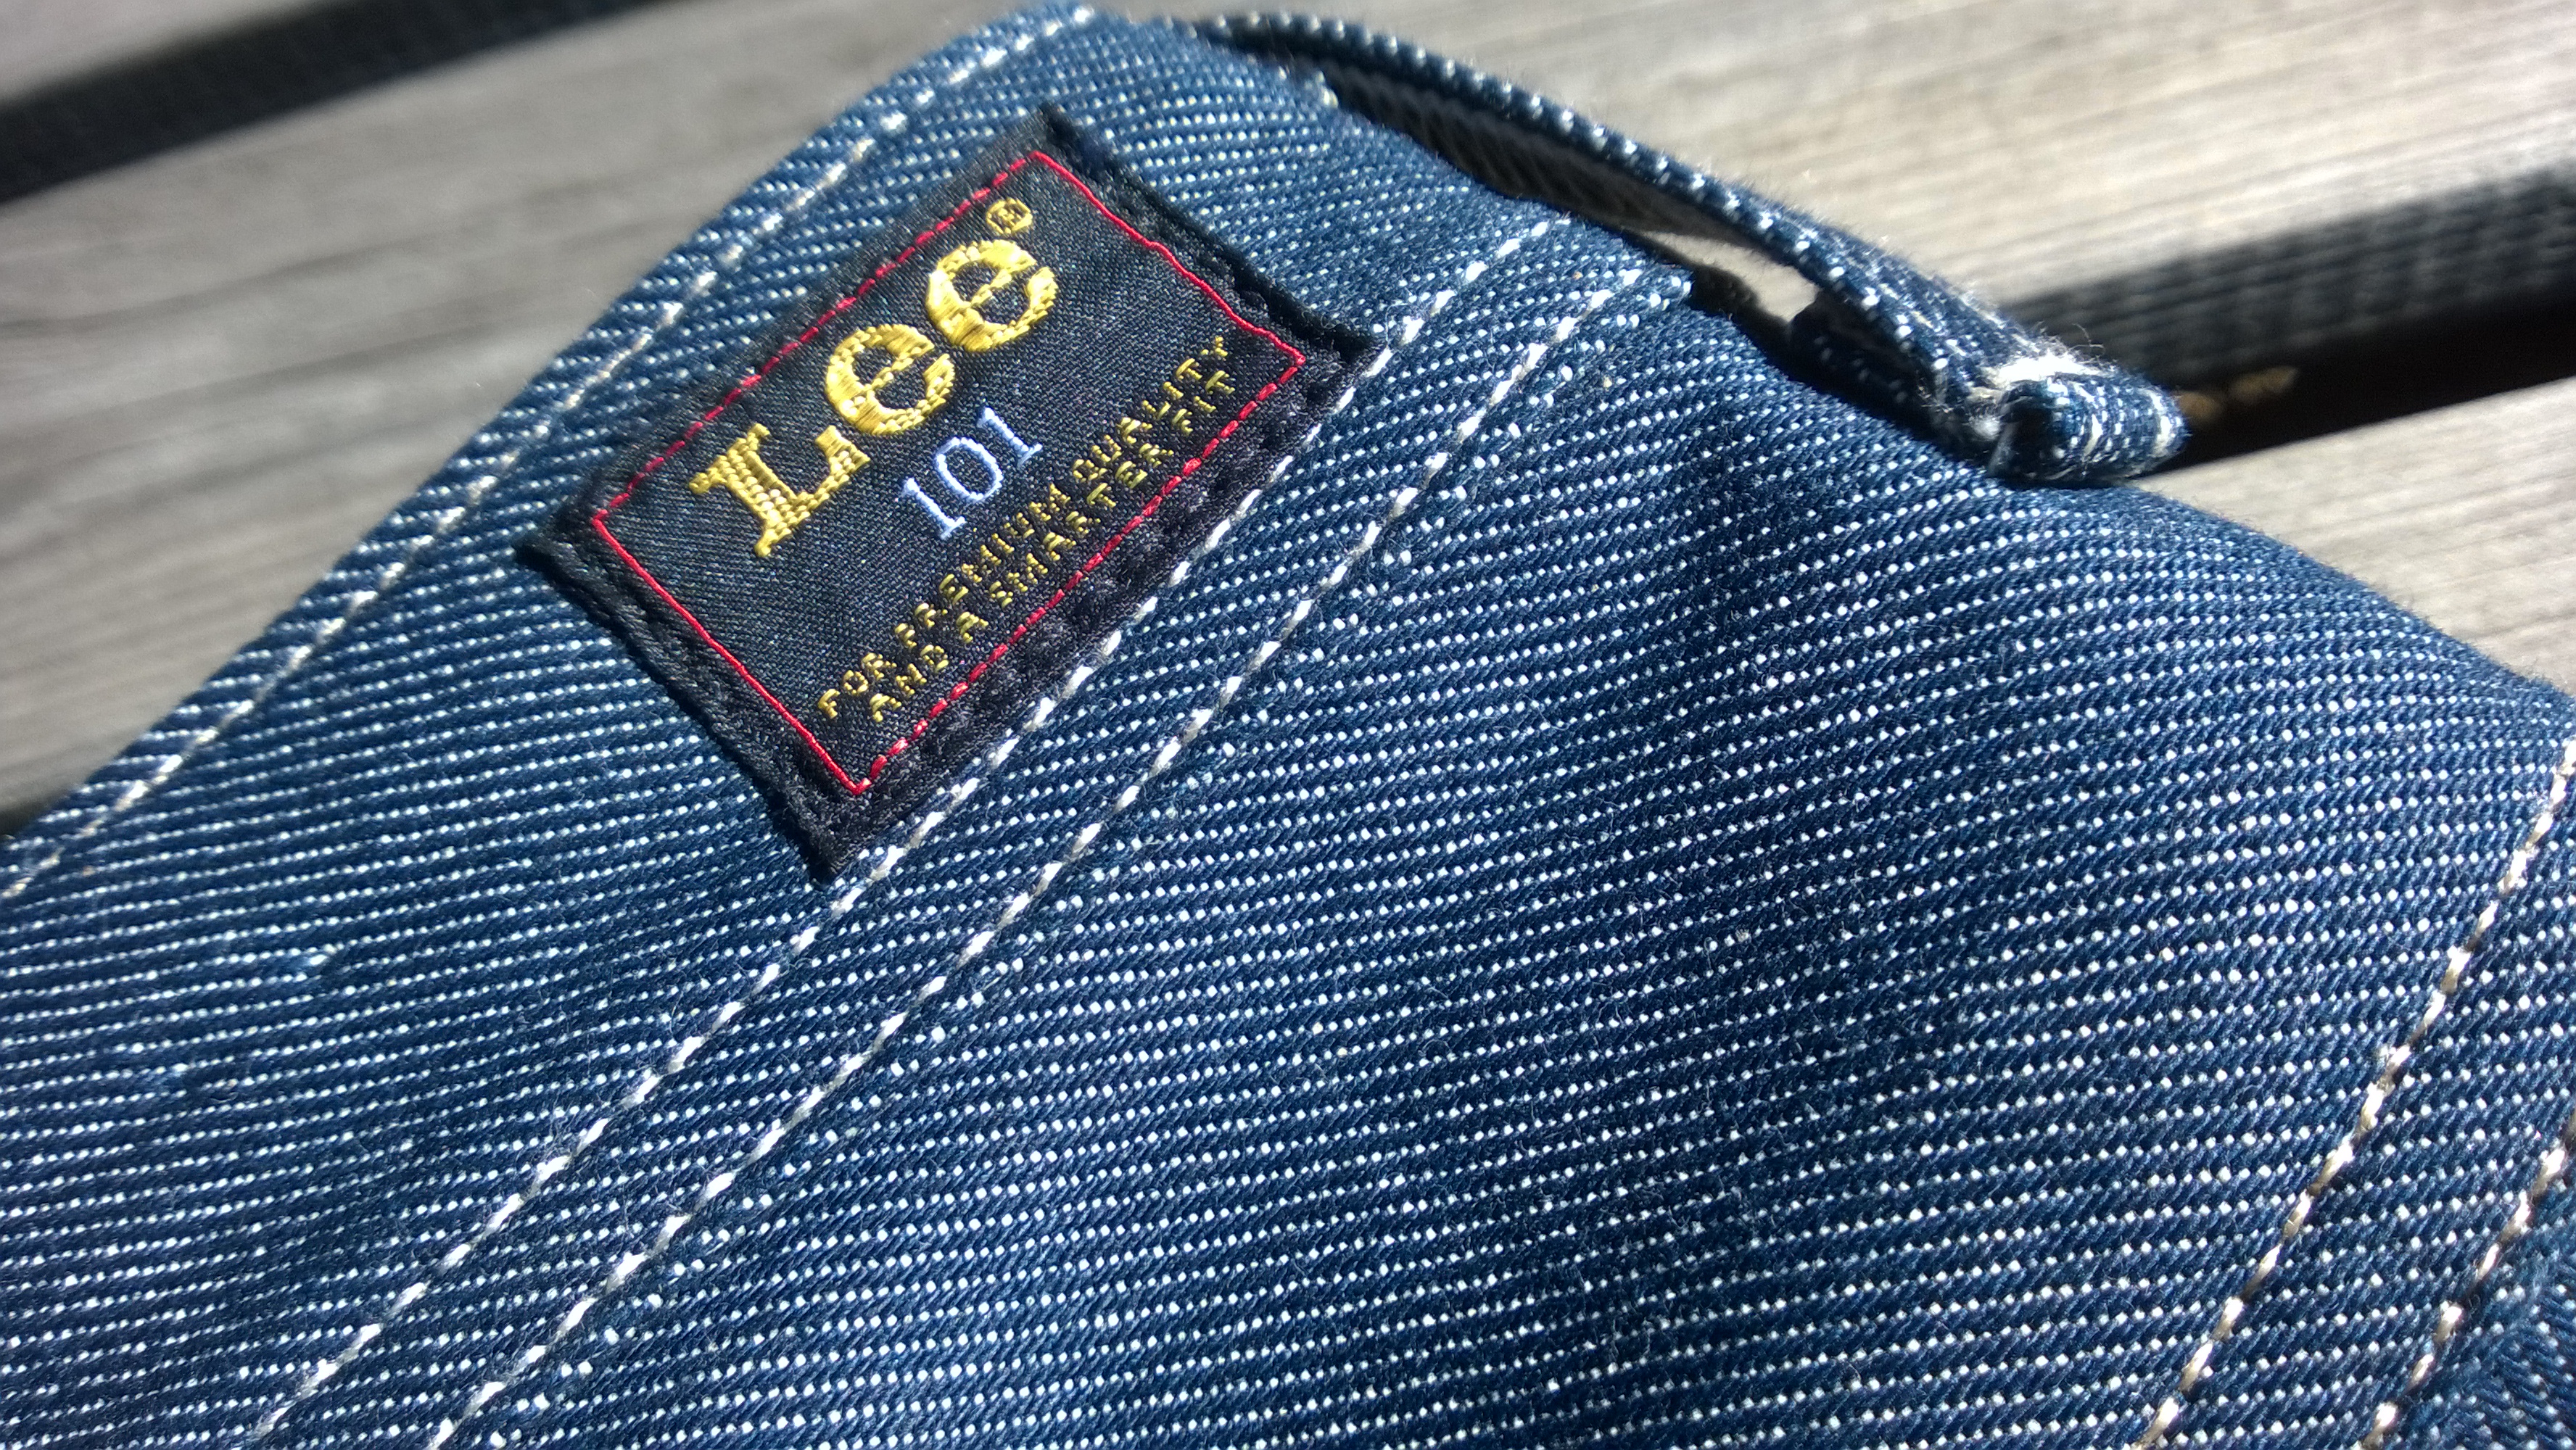 lee jeans company